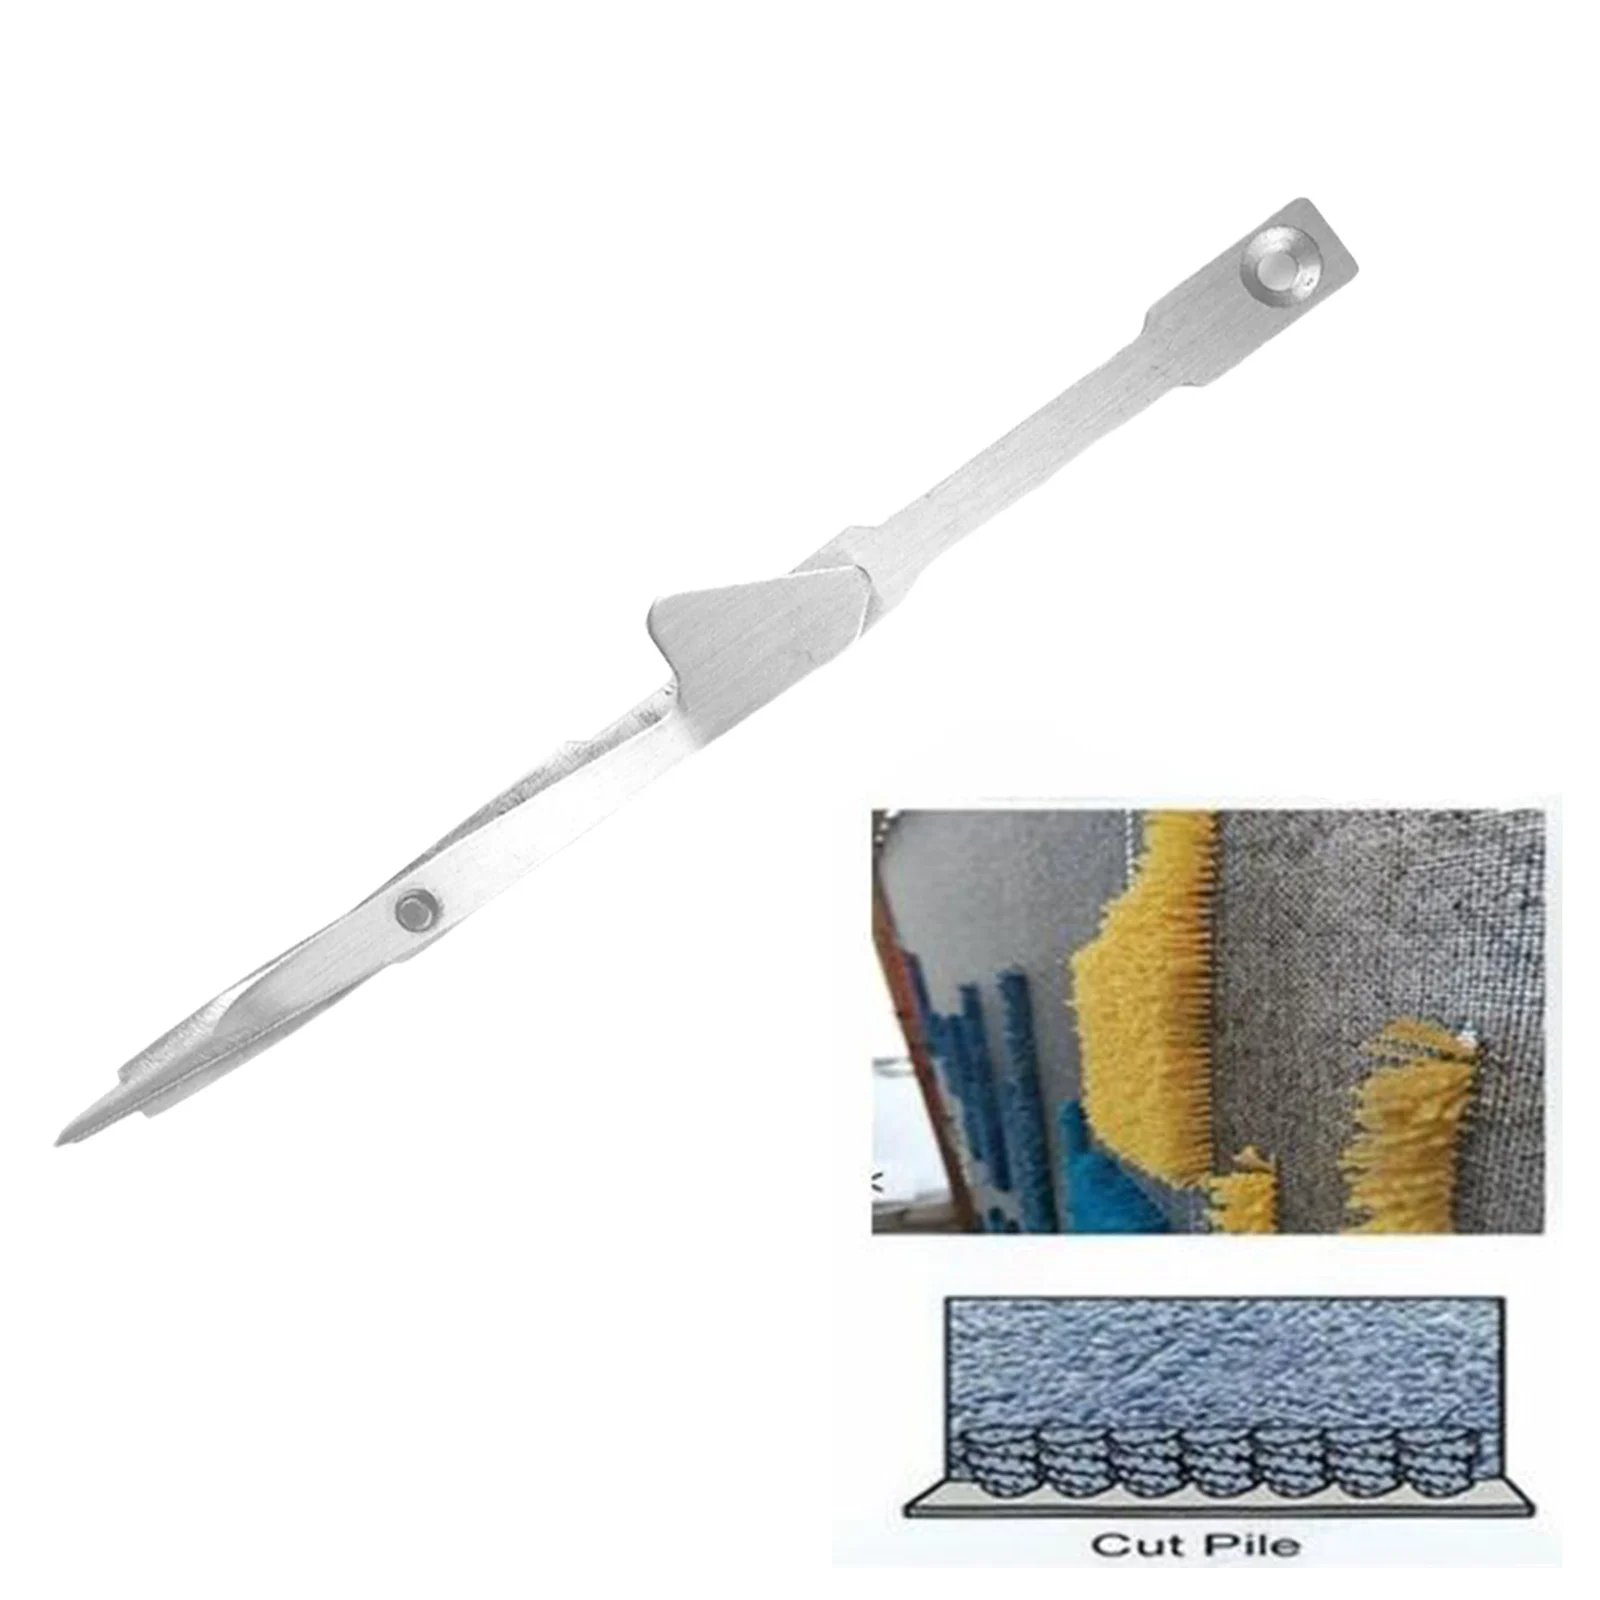 Loop Pile Scissor Cut Pile Scissor for Electric Hand Tufting Gun Rug Machines Power Tool Parts Replacement Spare Accessories